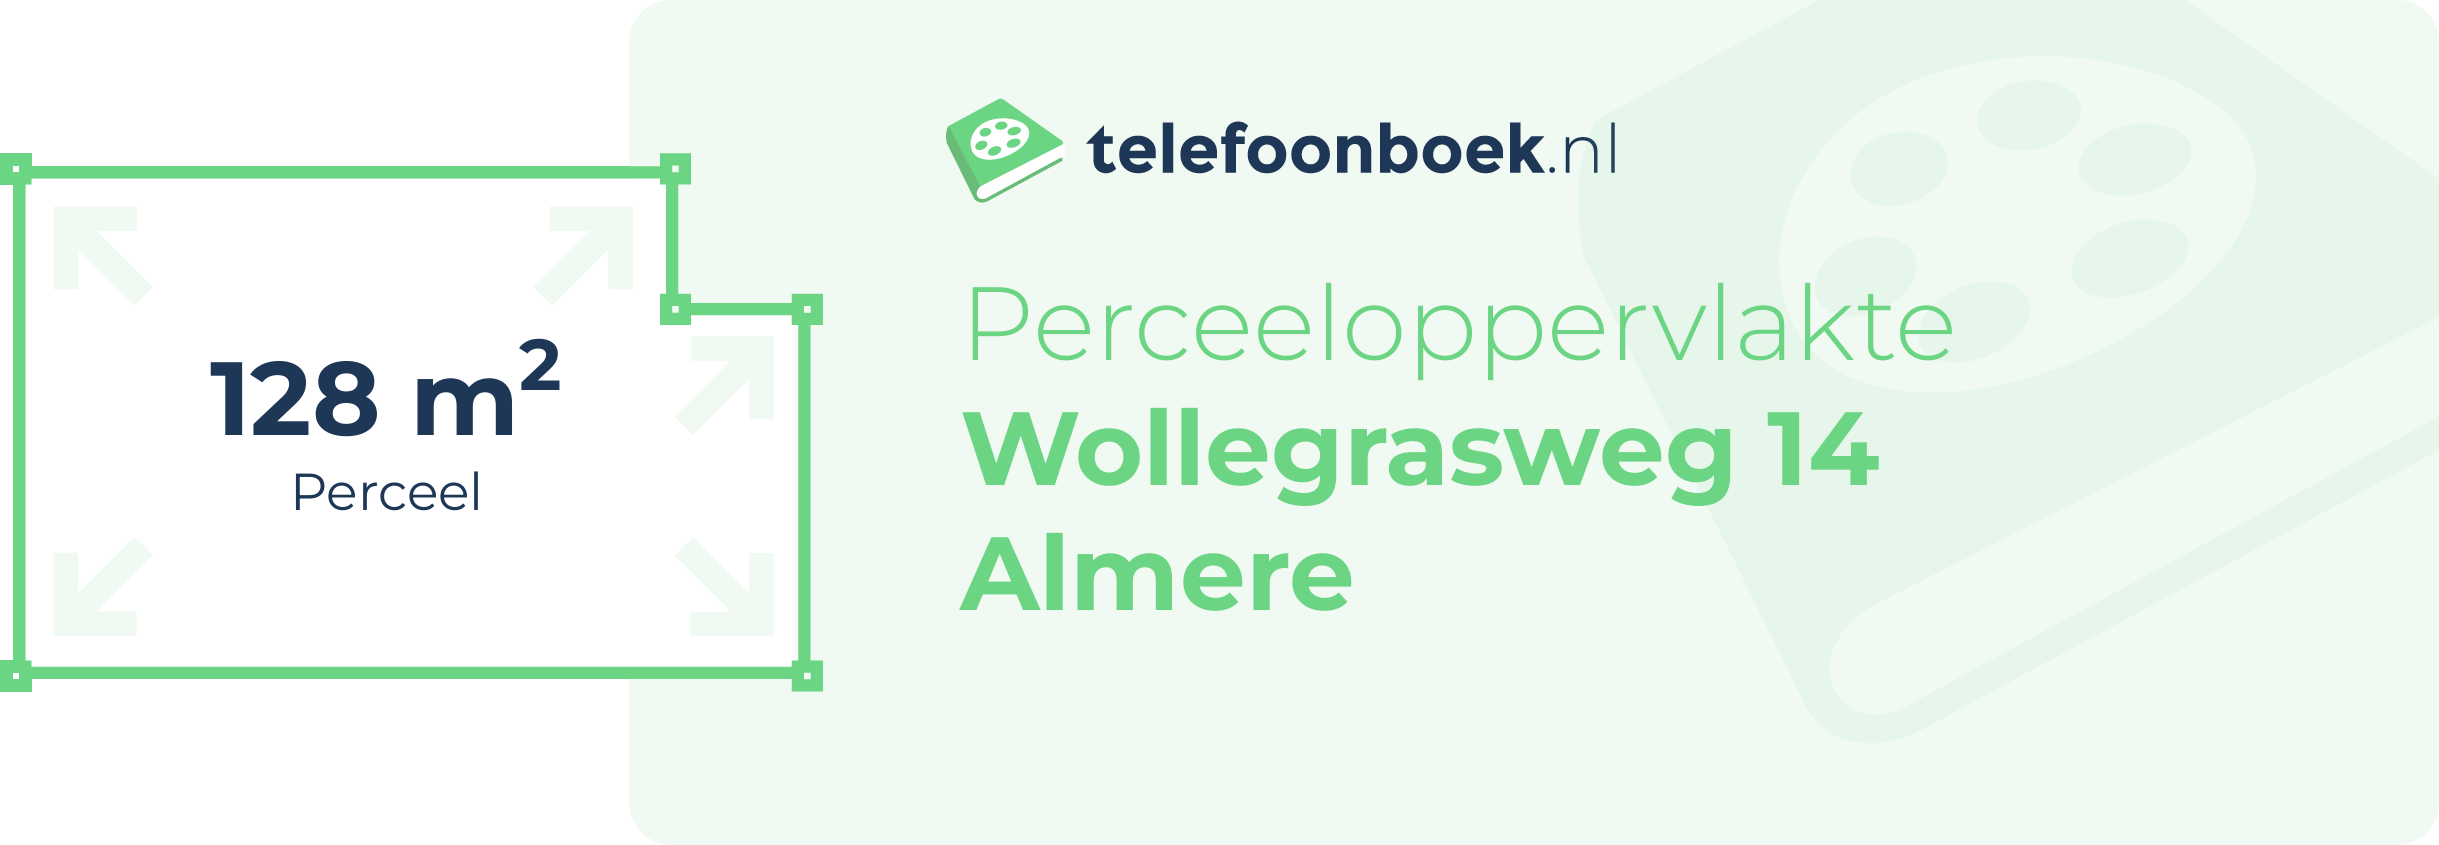 Perceeloppervlakte Wollegrasweg 14 Almere